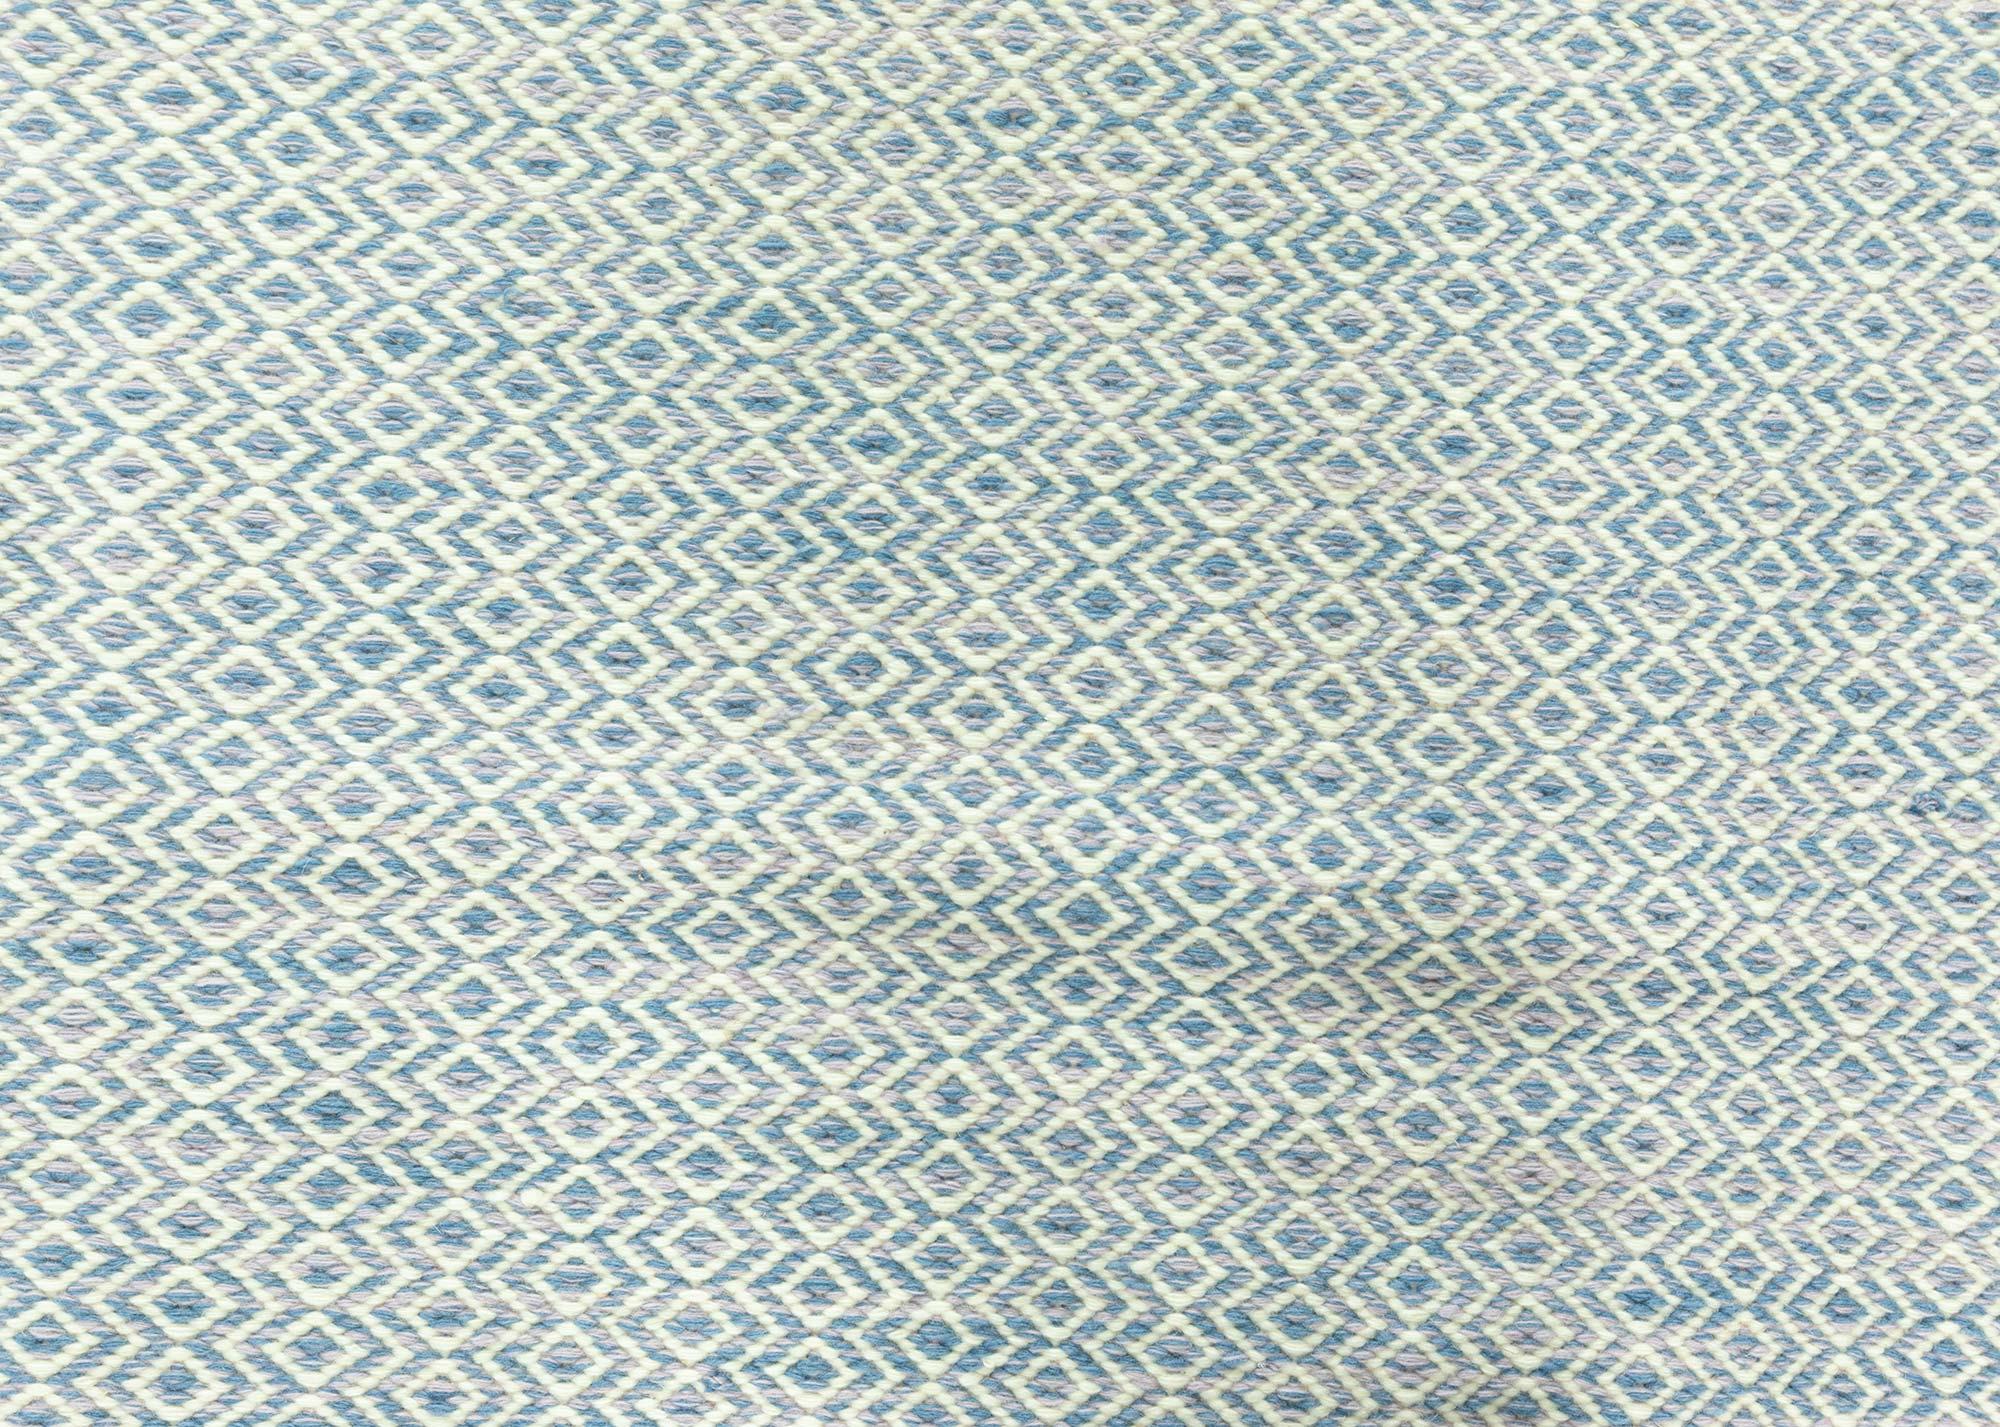 Modern Beige Blue flat weave wool runner by Doris Leslie Blau
Size: 2'5